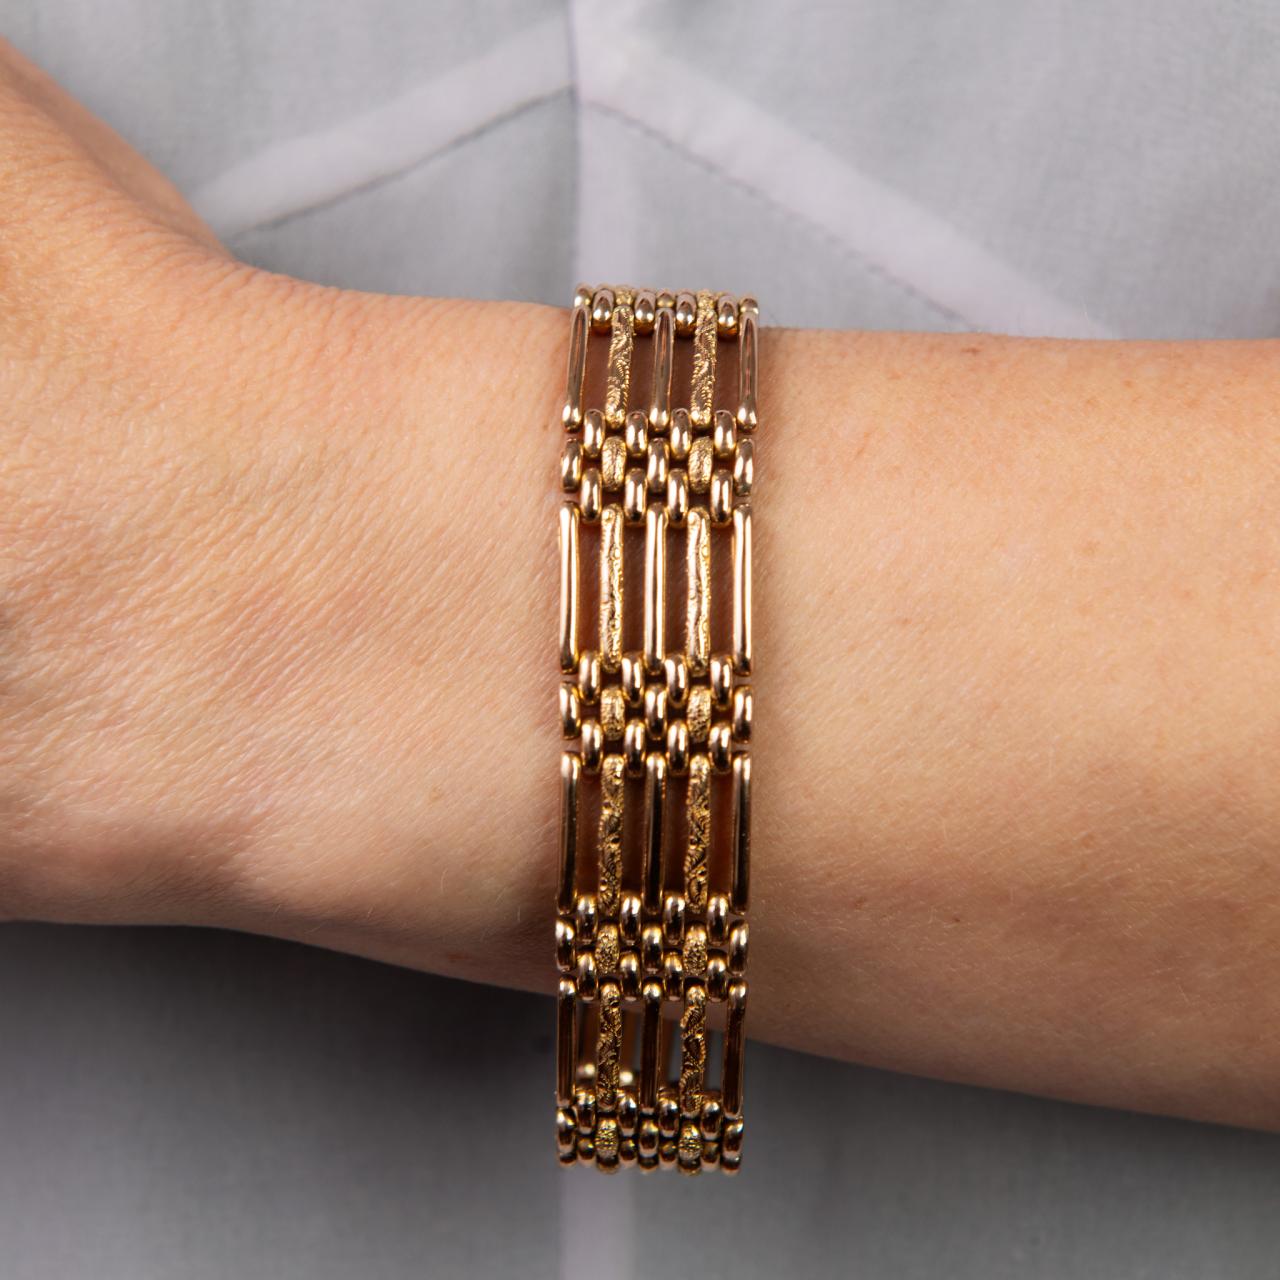 Fabulous textured link bracelet with padlock to close